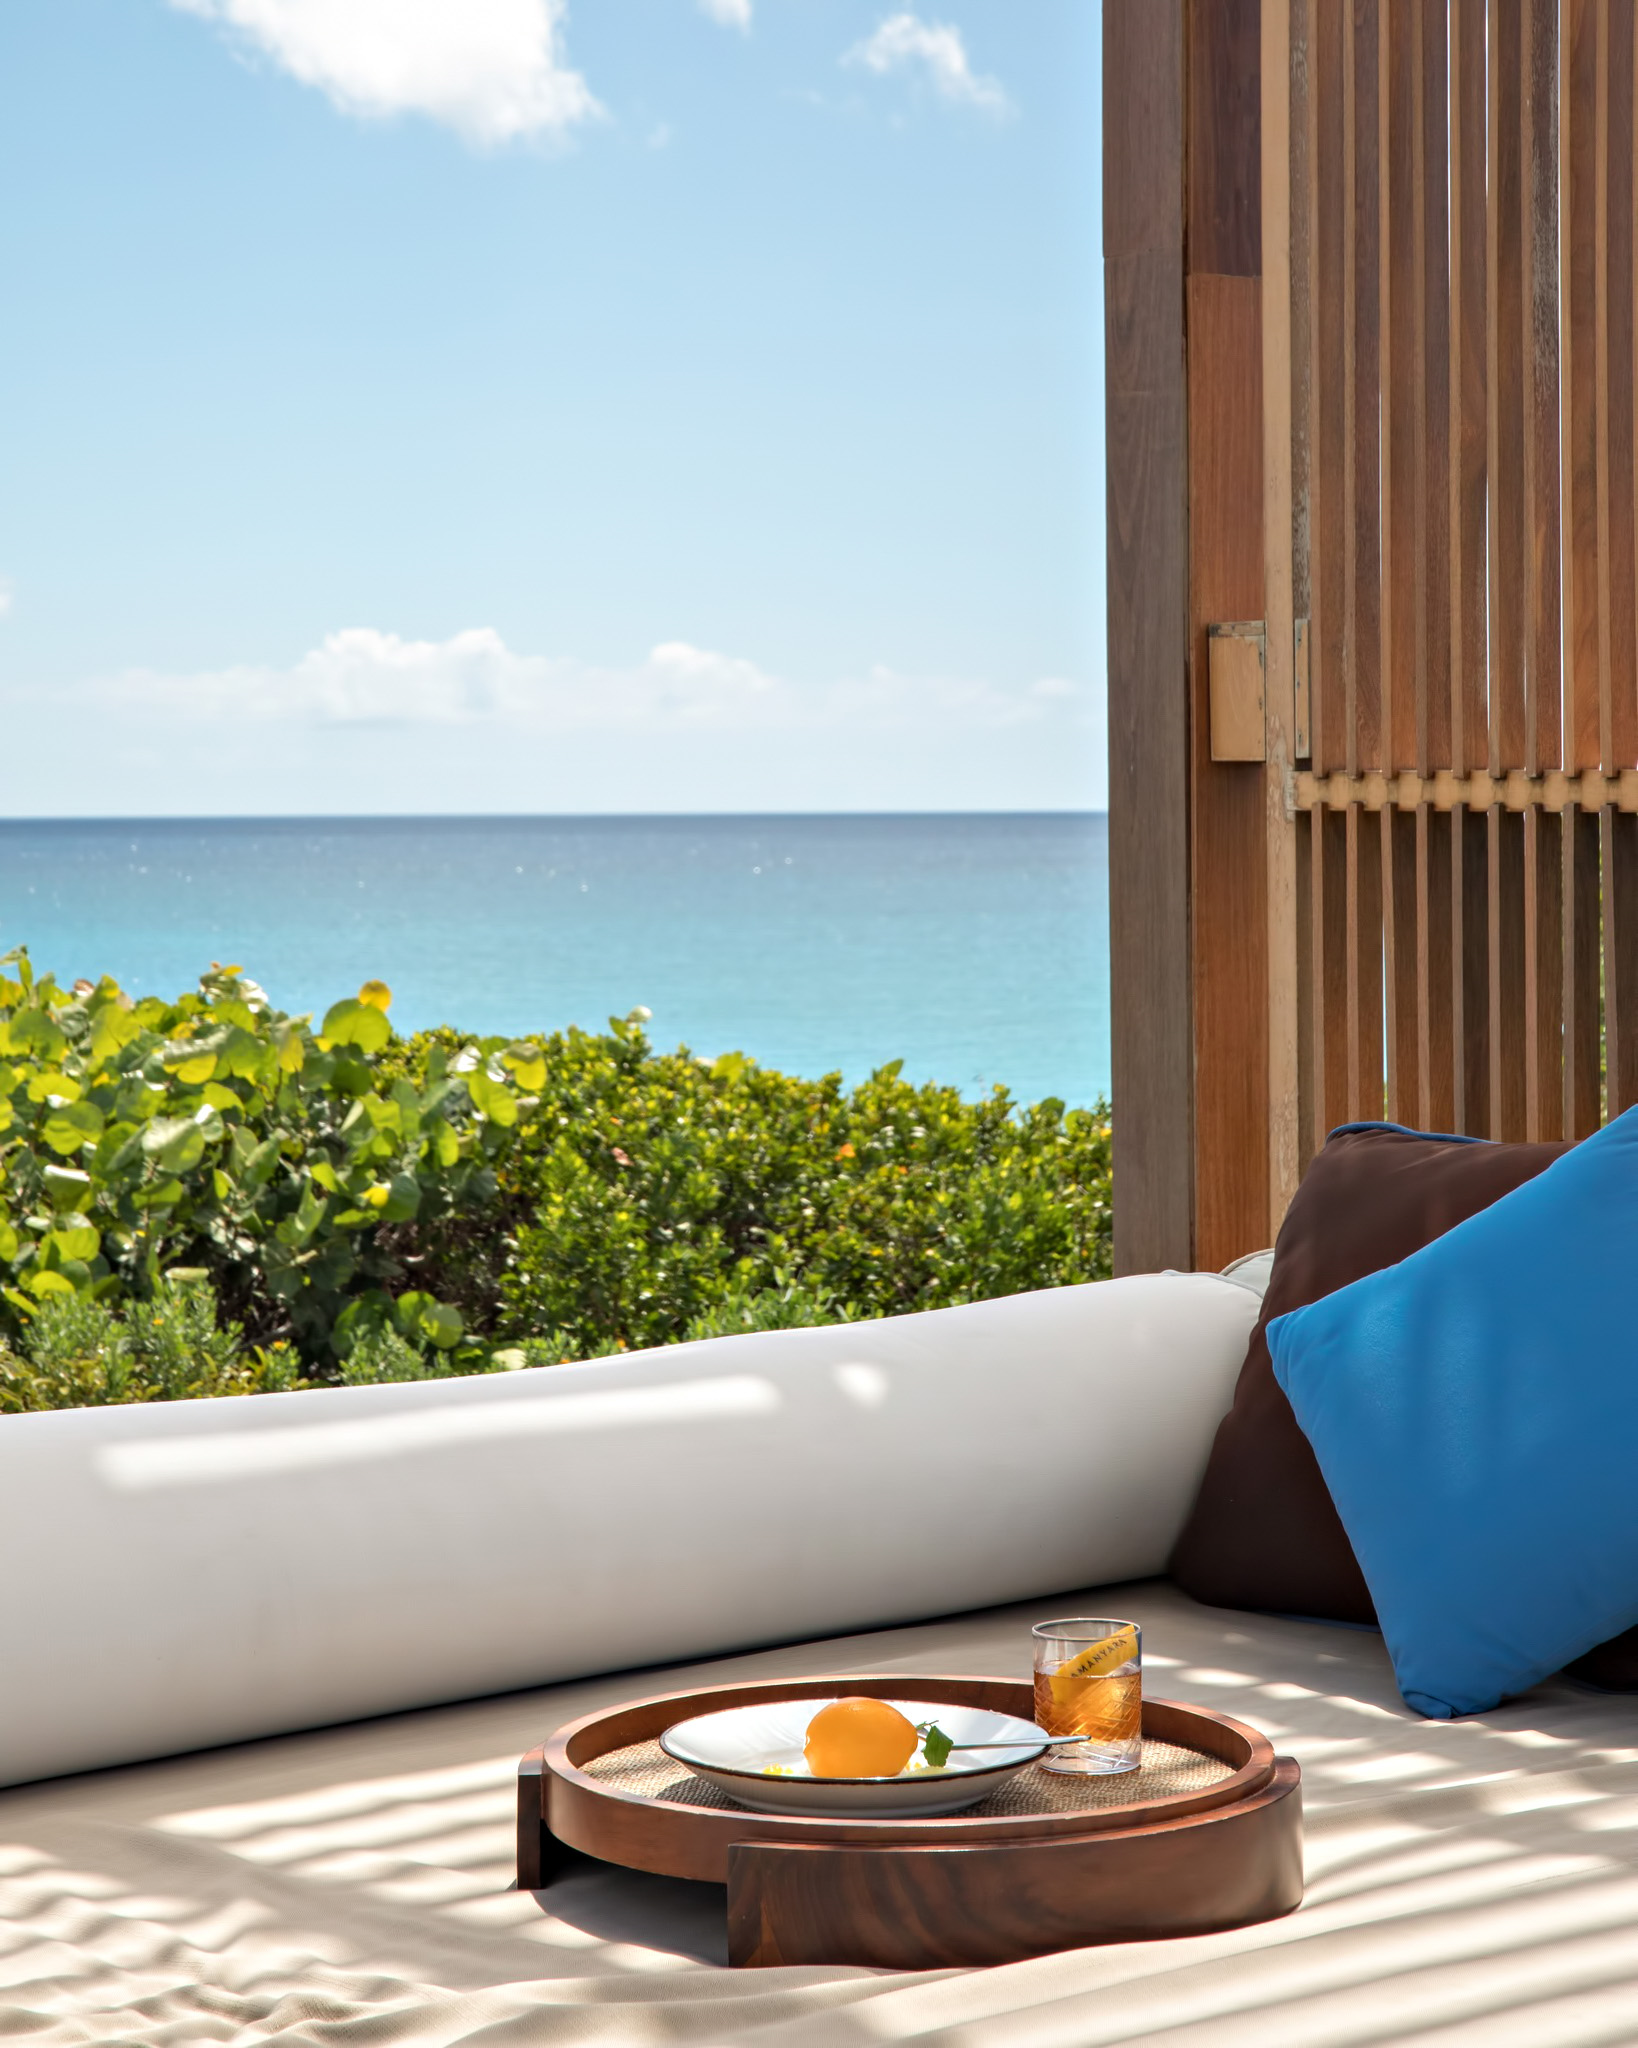 Amanyara Resort – Providenciales, Turks and Caicos Islands – Breezy Seaside Cuisine